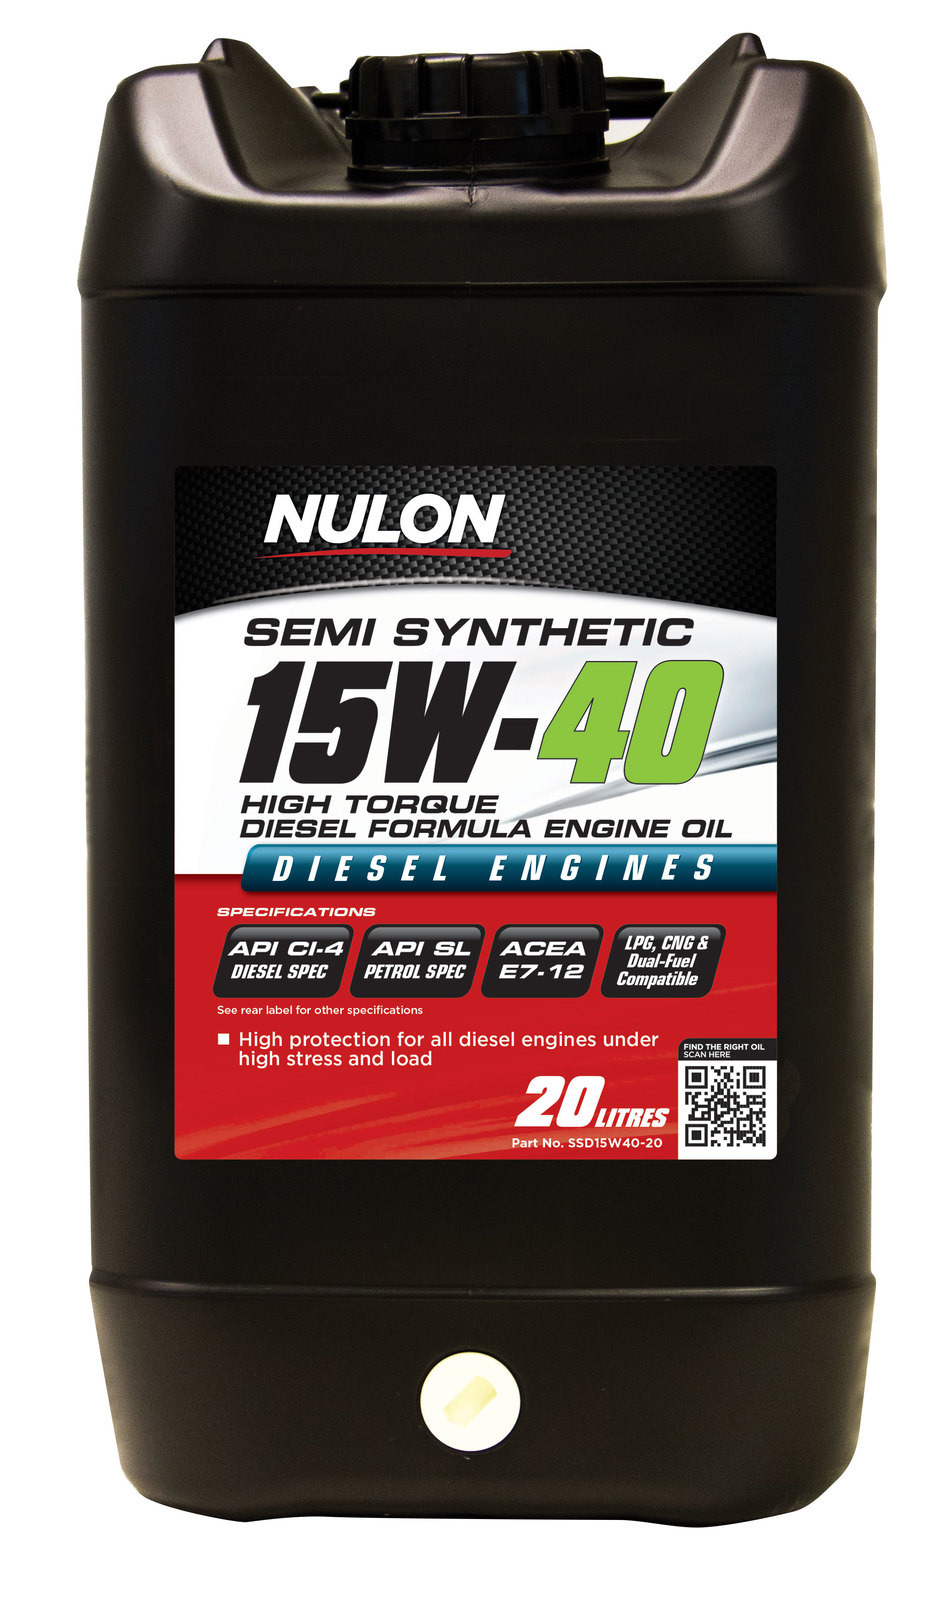 Nulon Semi Synthetic 15w 40 High Torque Diesel Formula Engine Oil 20 Litre